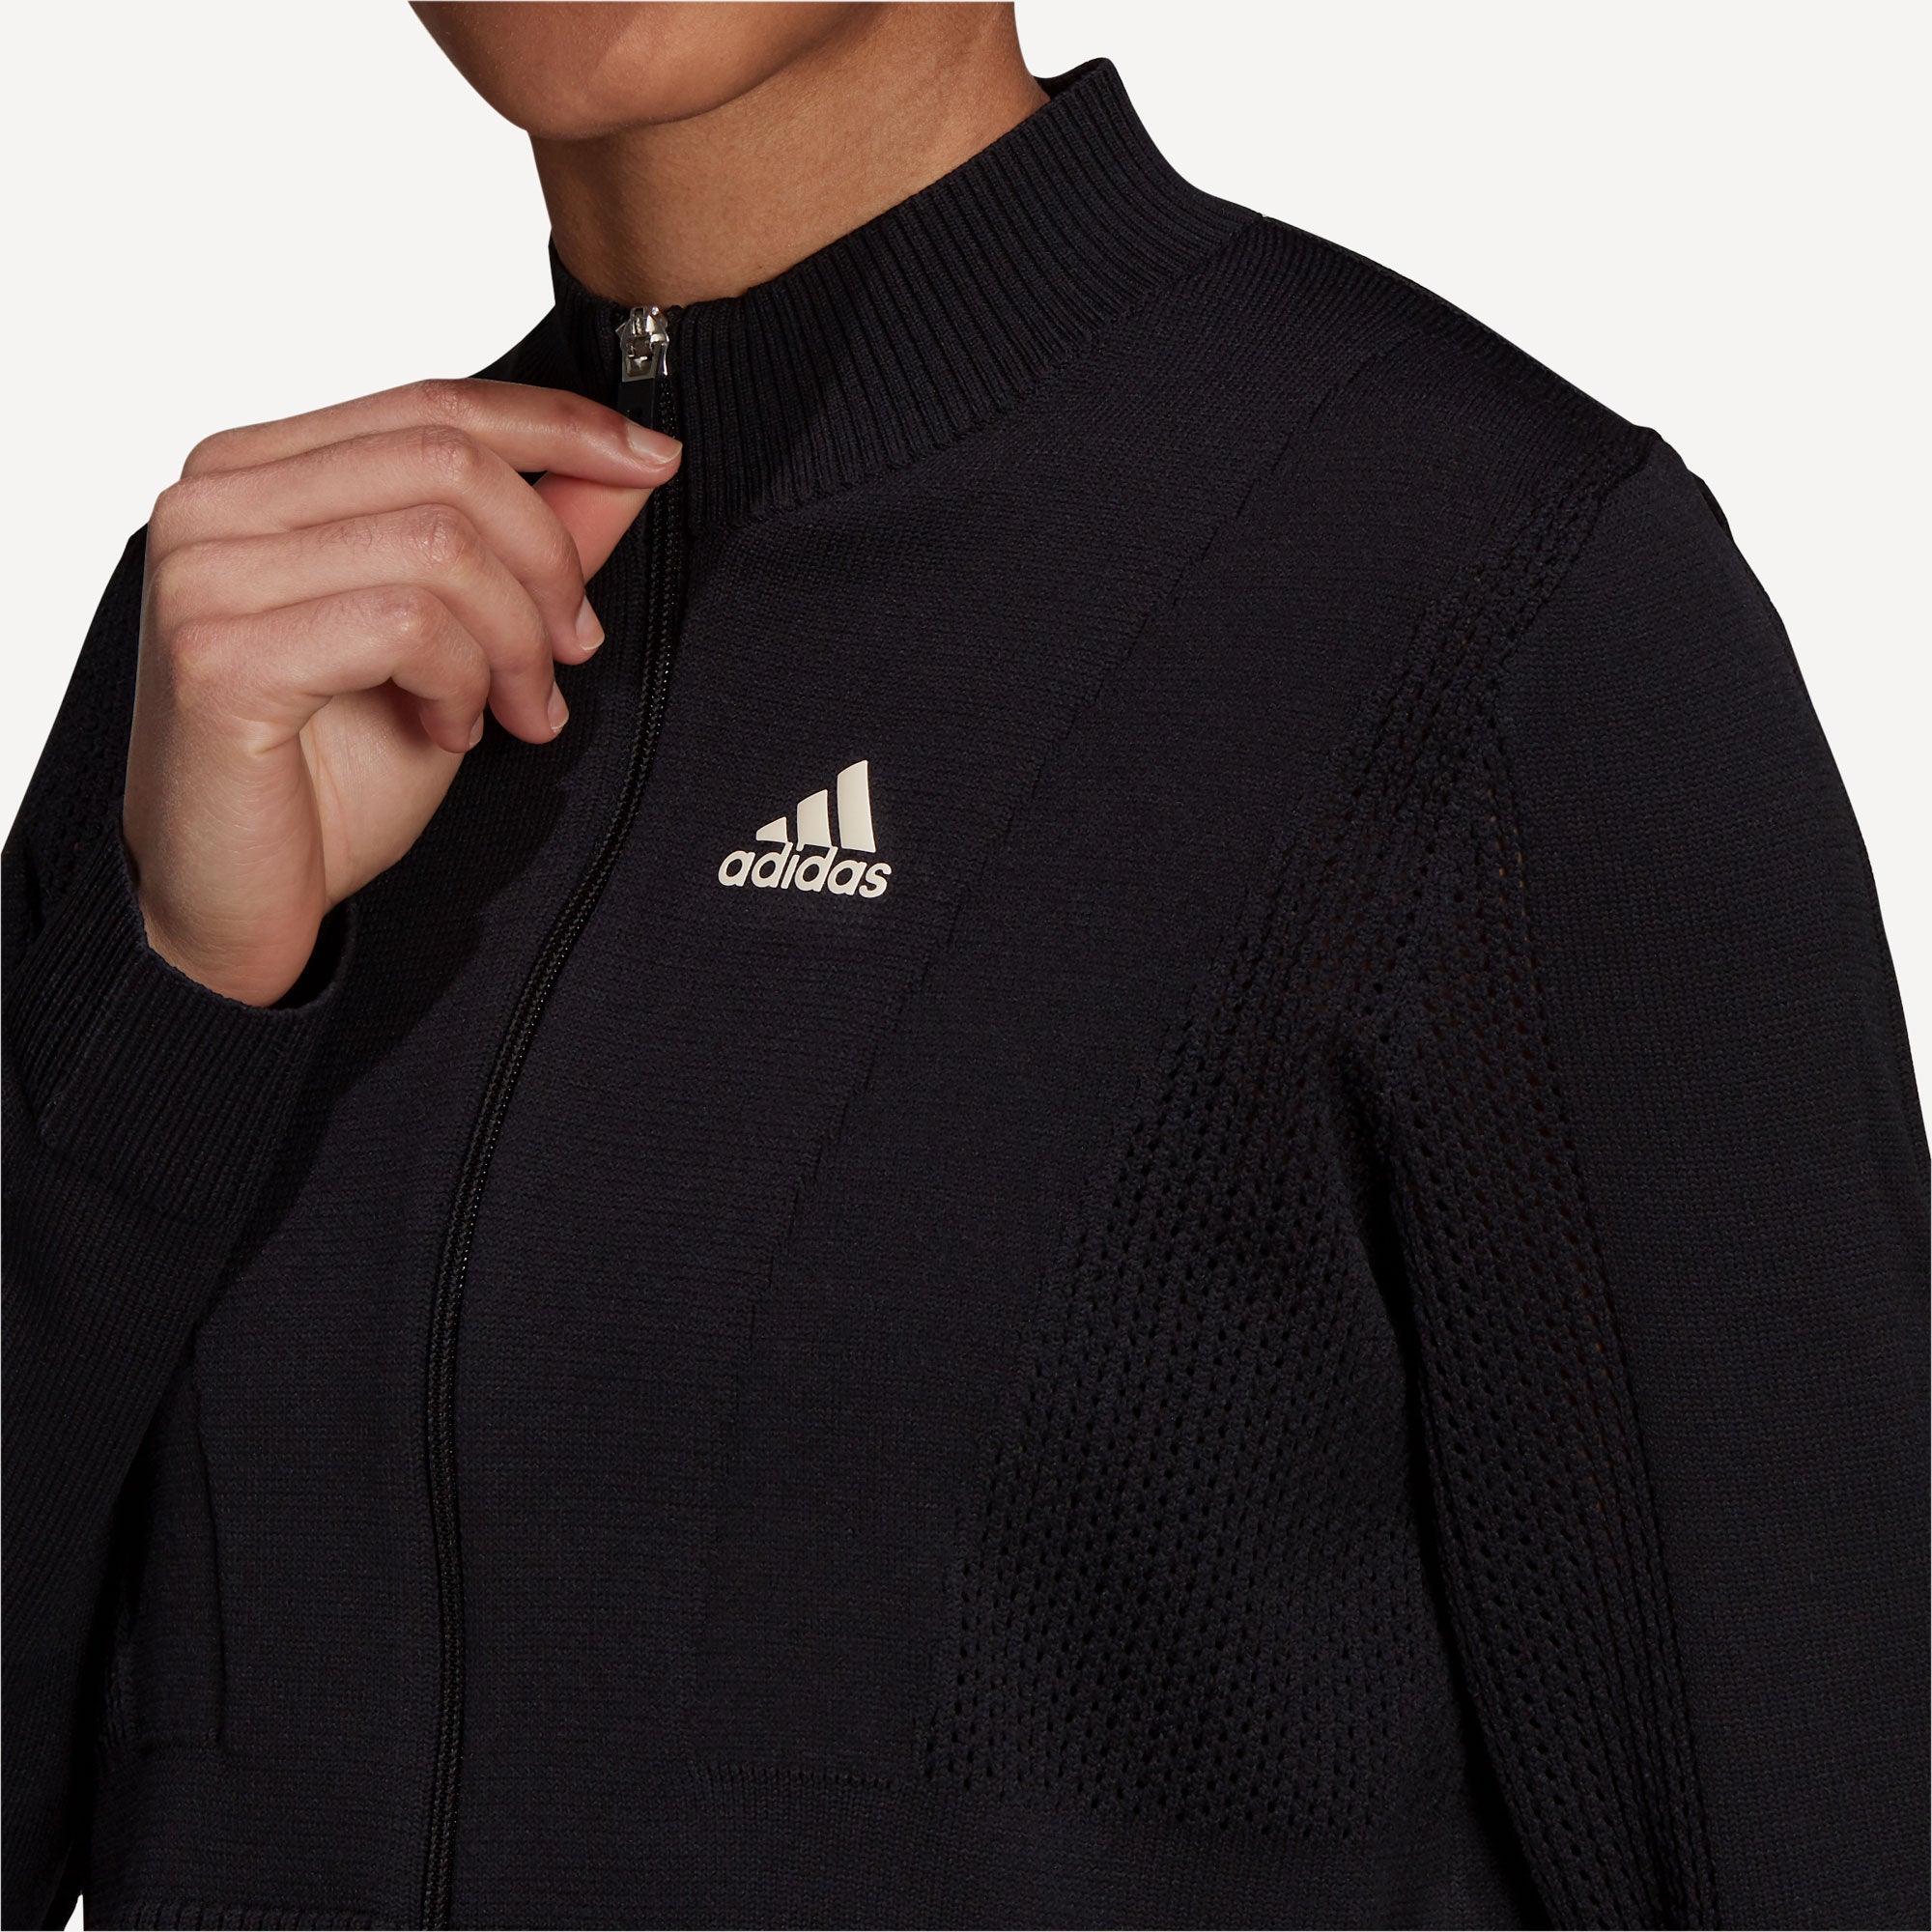 adidas Primeknit Women's Tennis Jacket Black (4)